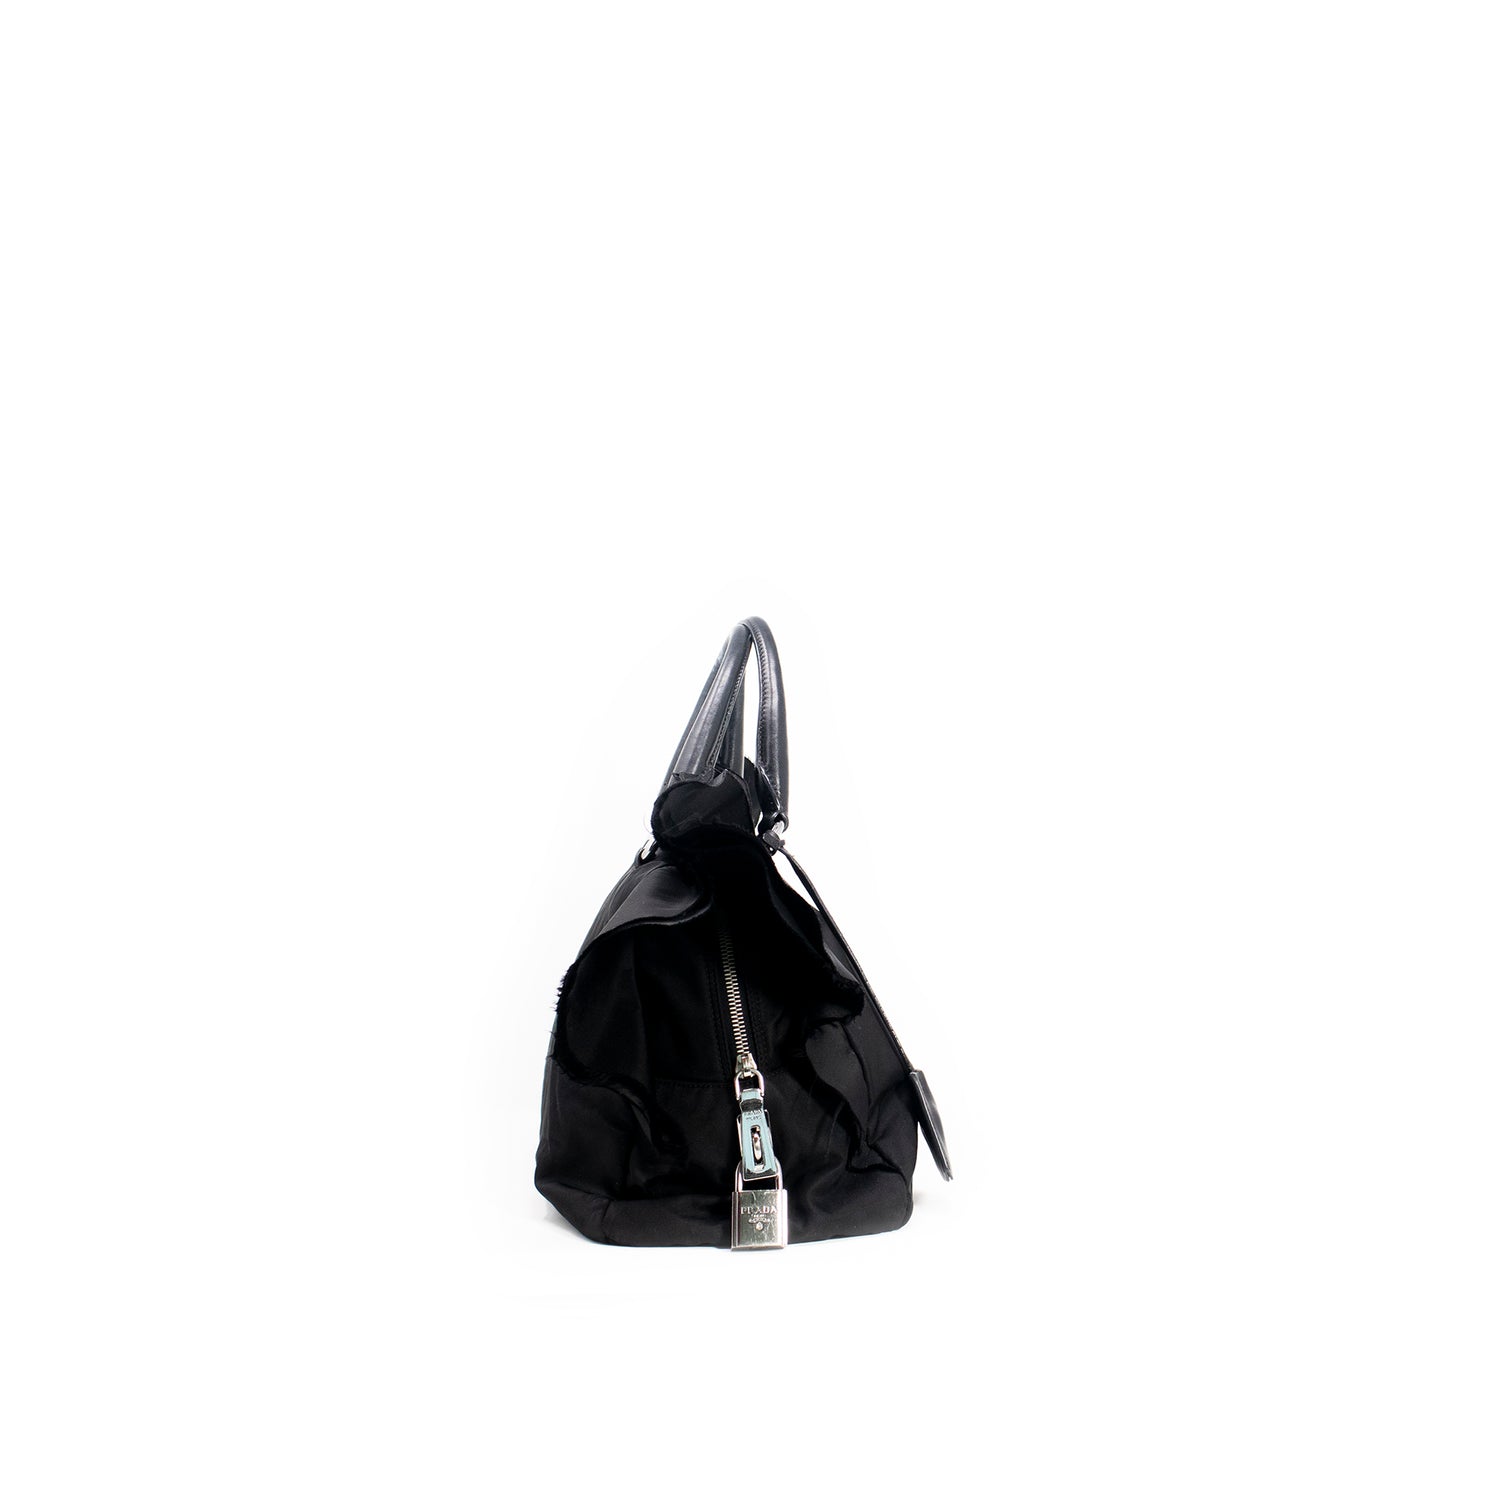 Prada Prada Ruffle Bauletto Black Nylon Hand Bag